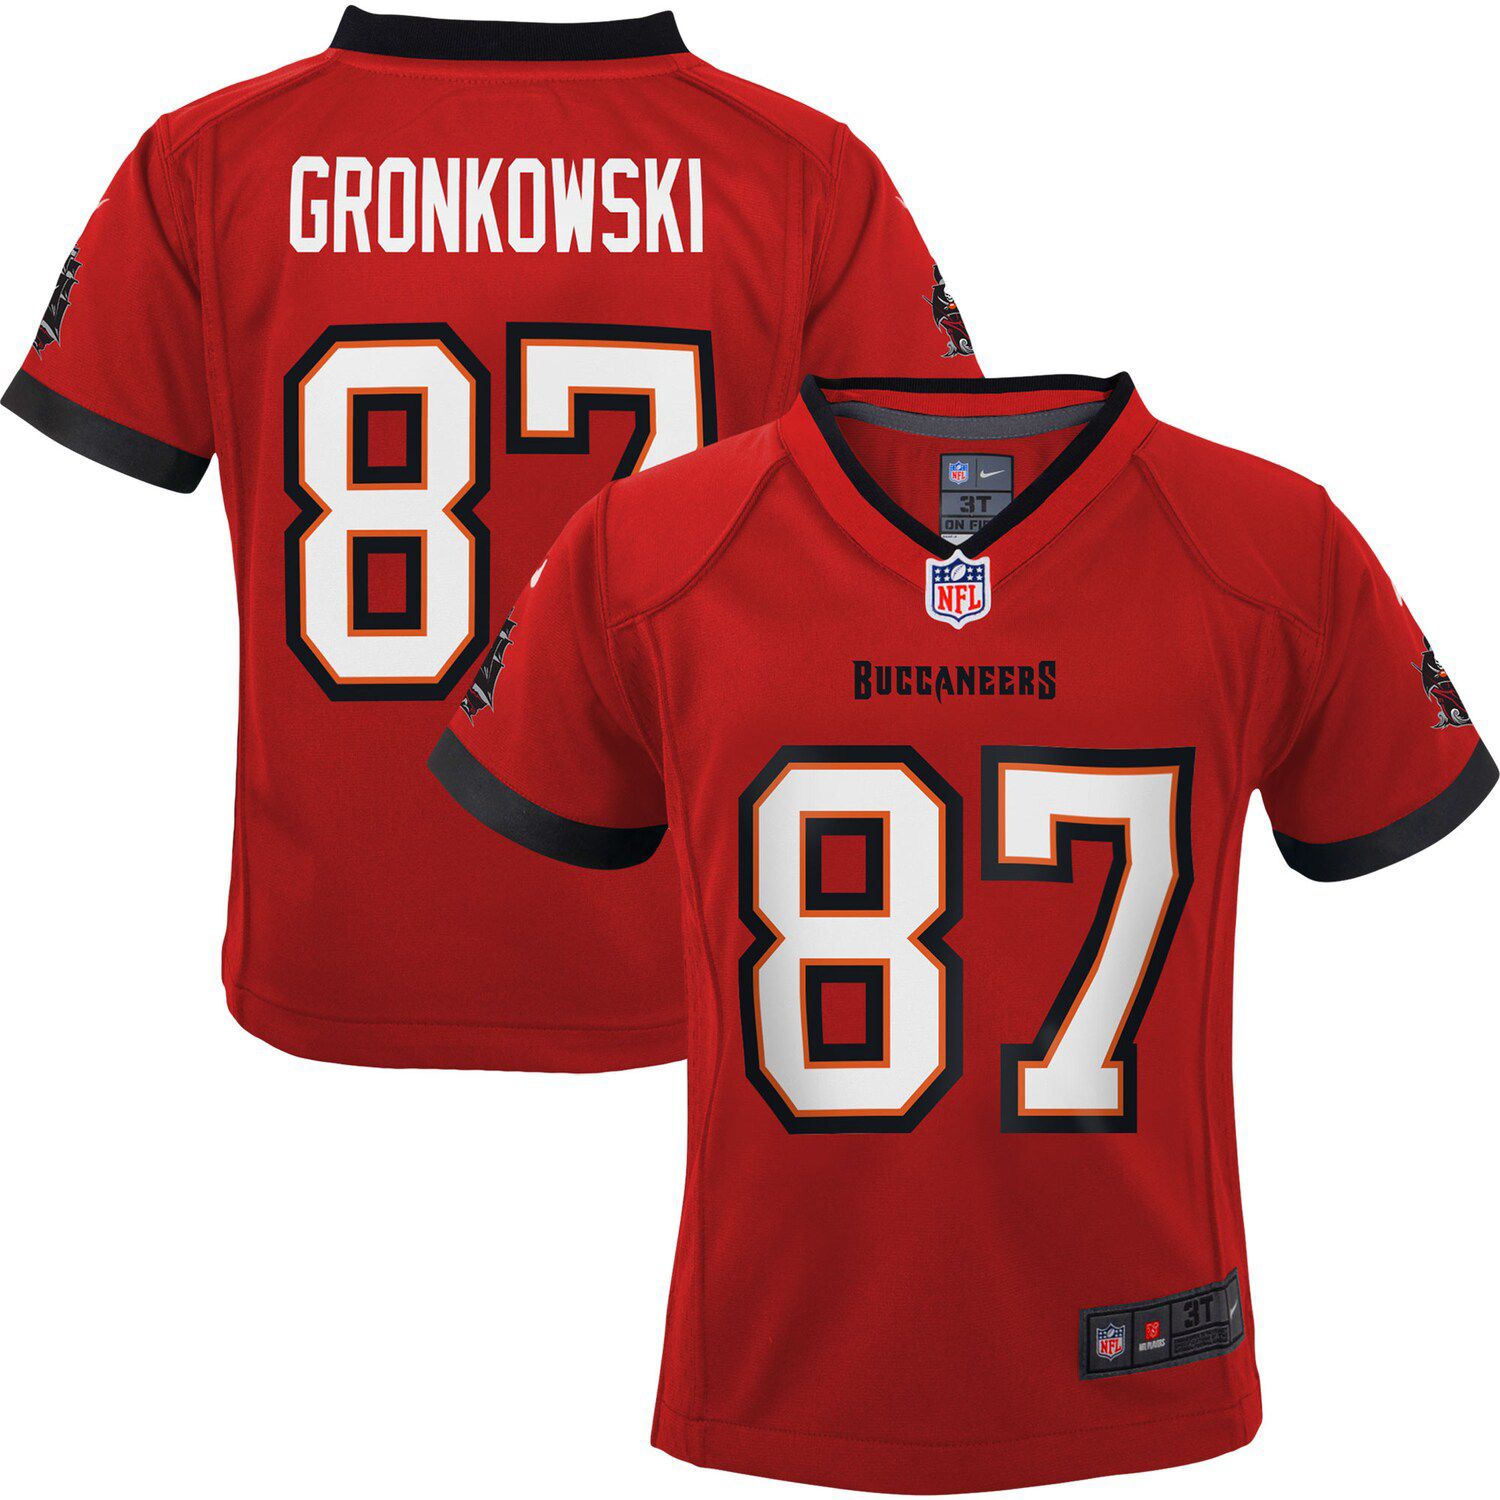 red gronkowski jersey